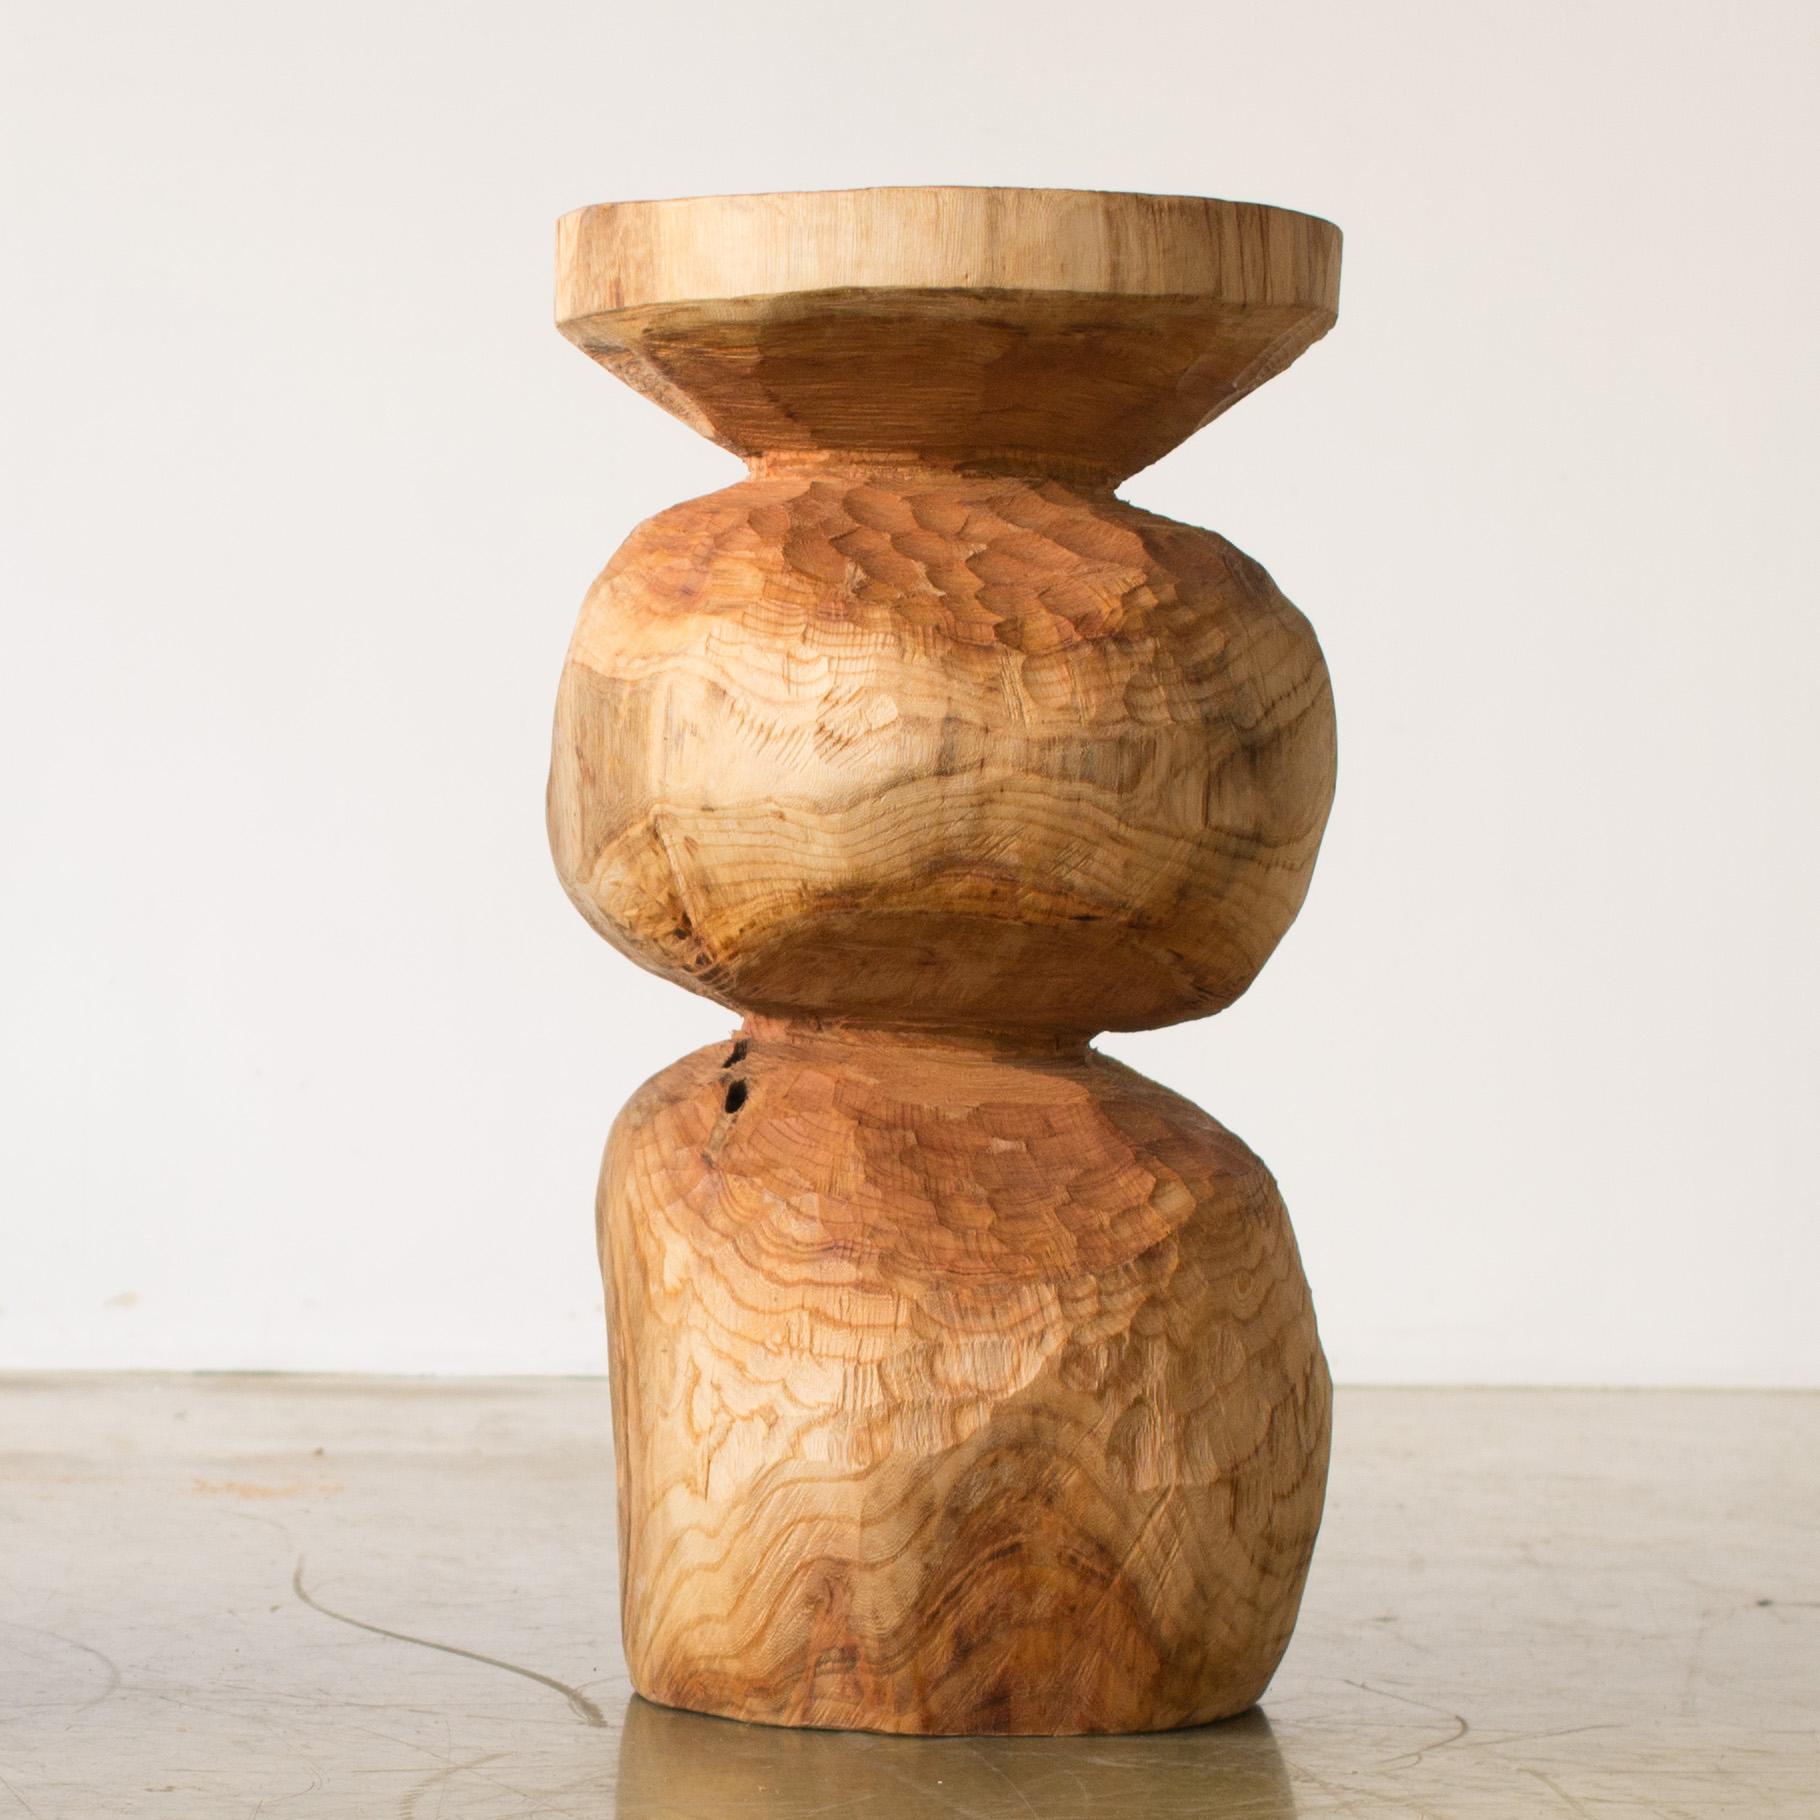 Hand-Carved Hiroyuki Nishimura Furniture Sculptural Wood Stool10-09 Tribal Glamping For Sale